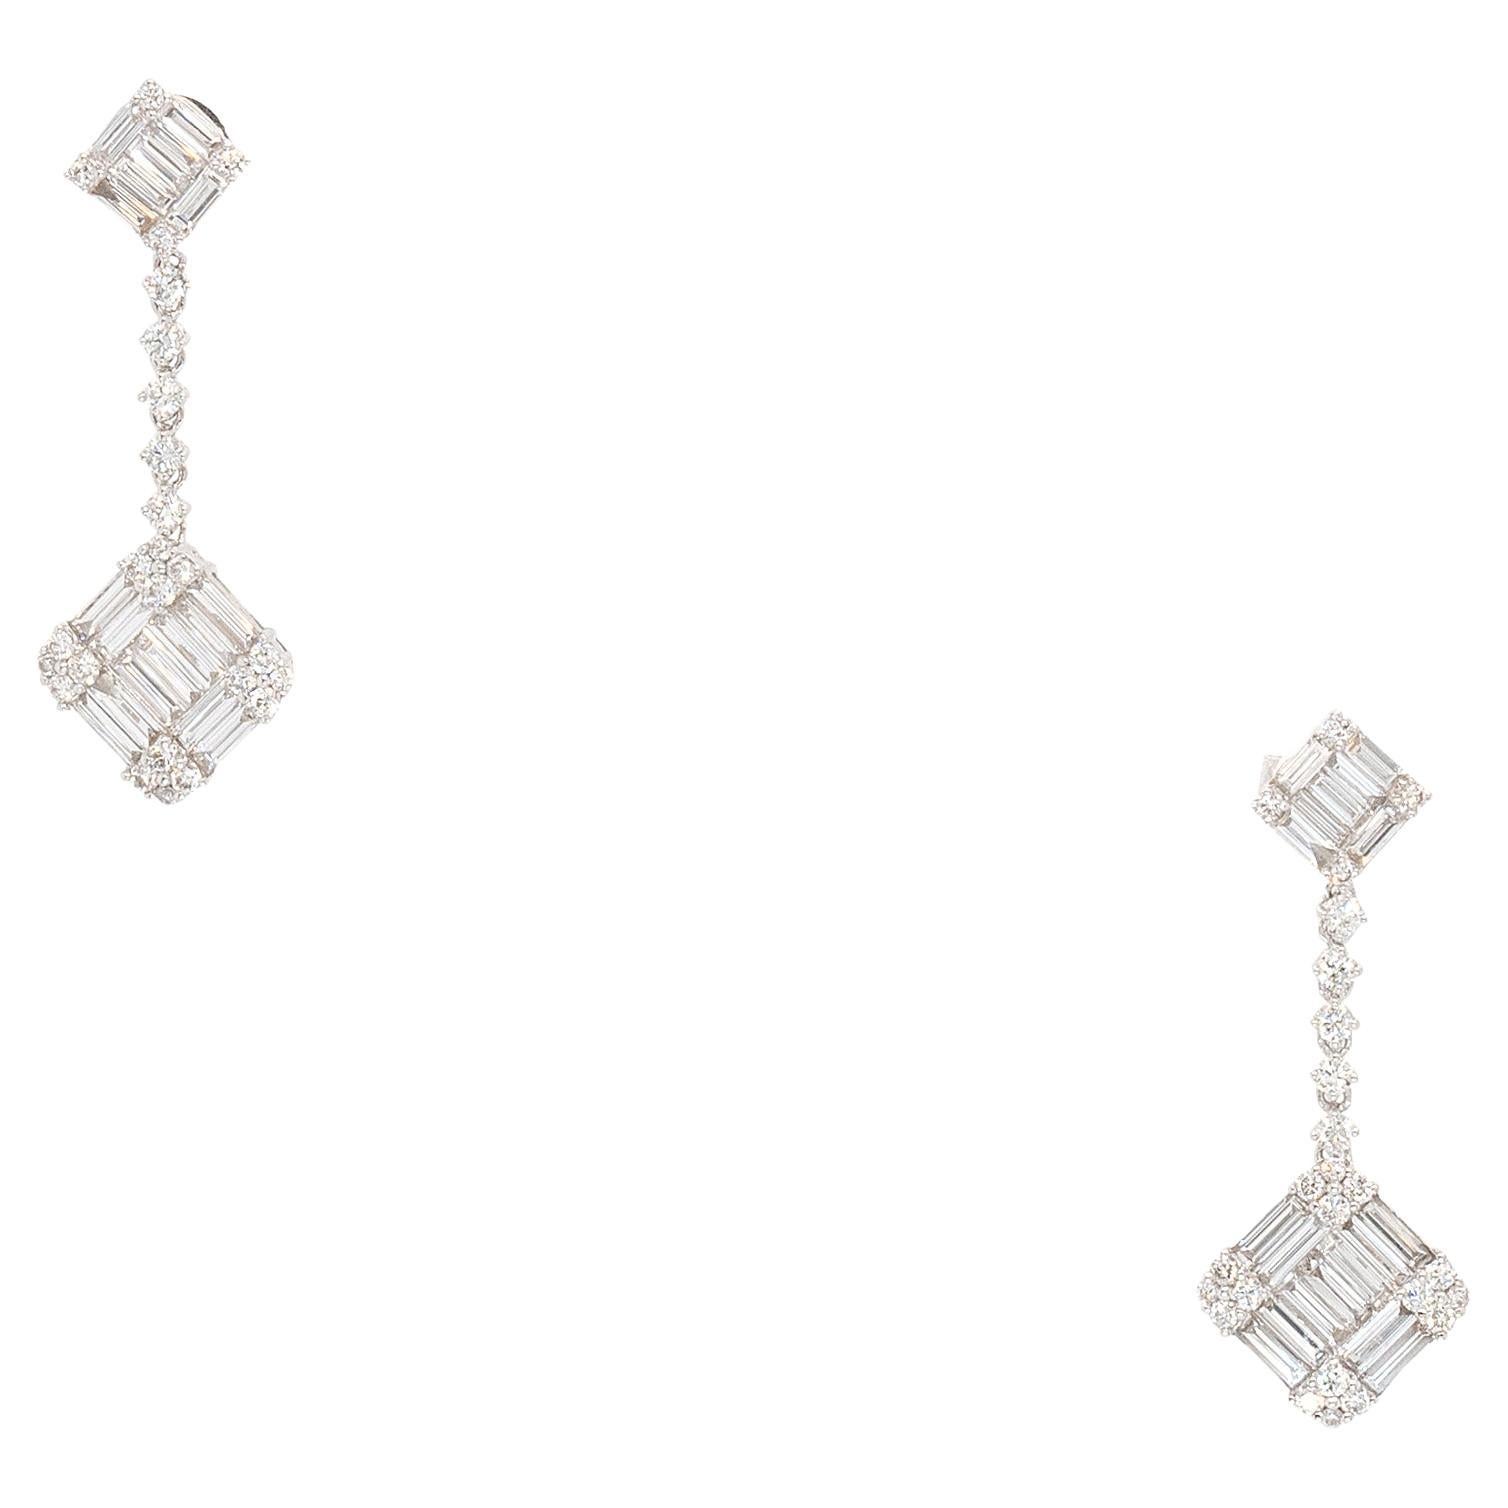 Pendants d'oreilles en or blanc 18 carats avec diamants naturels ronds de 2,21 carats et 0,95 carat